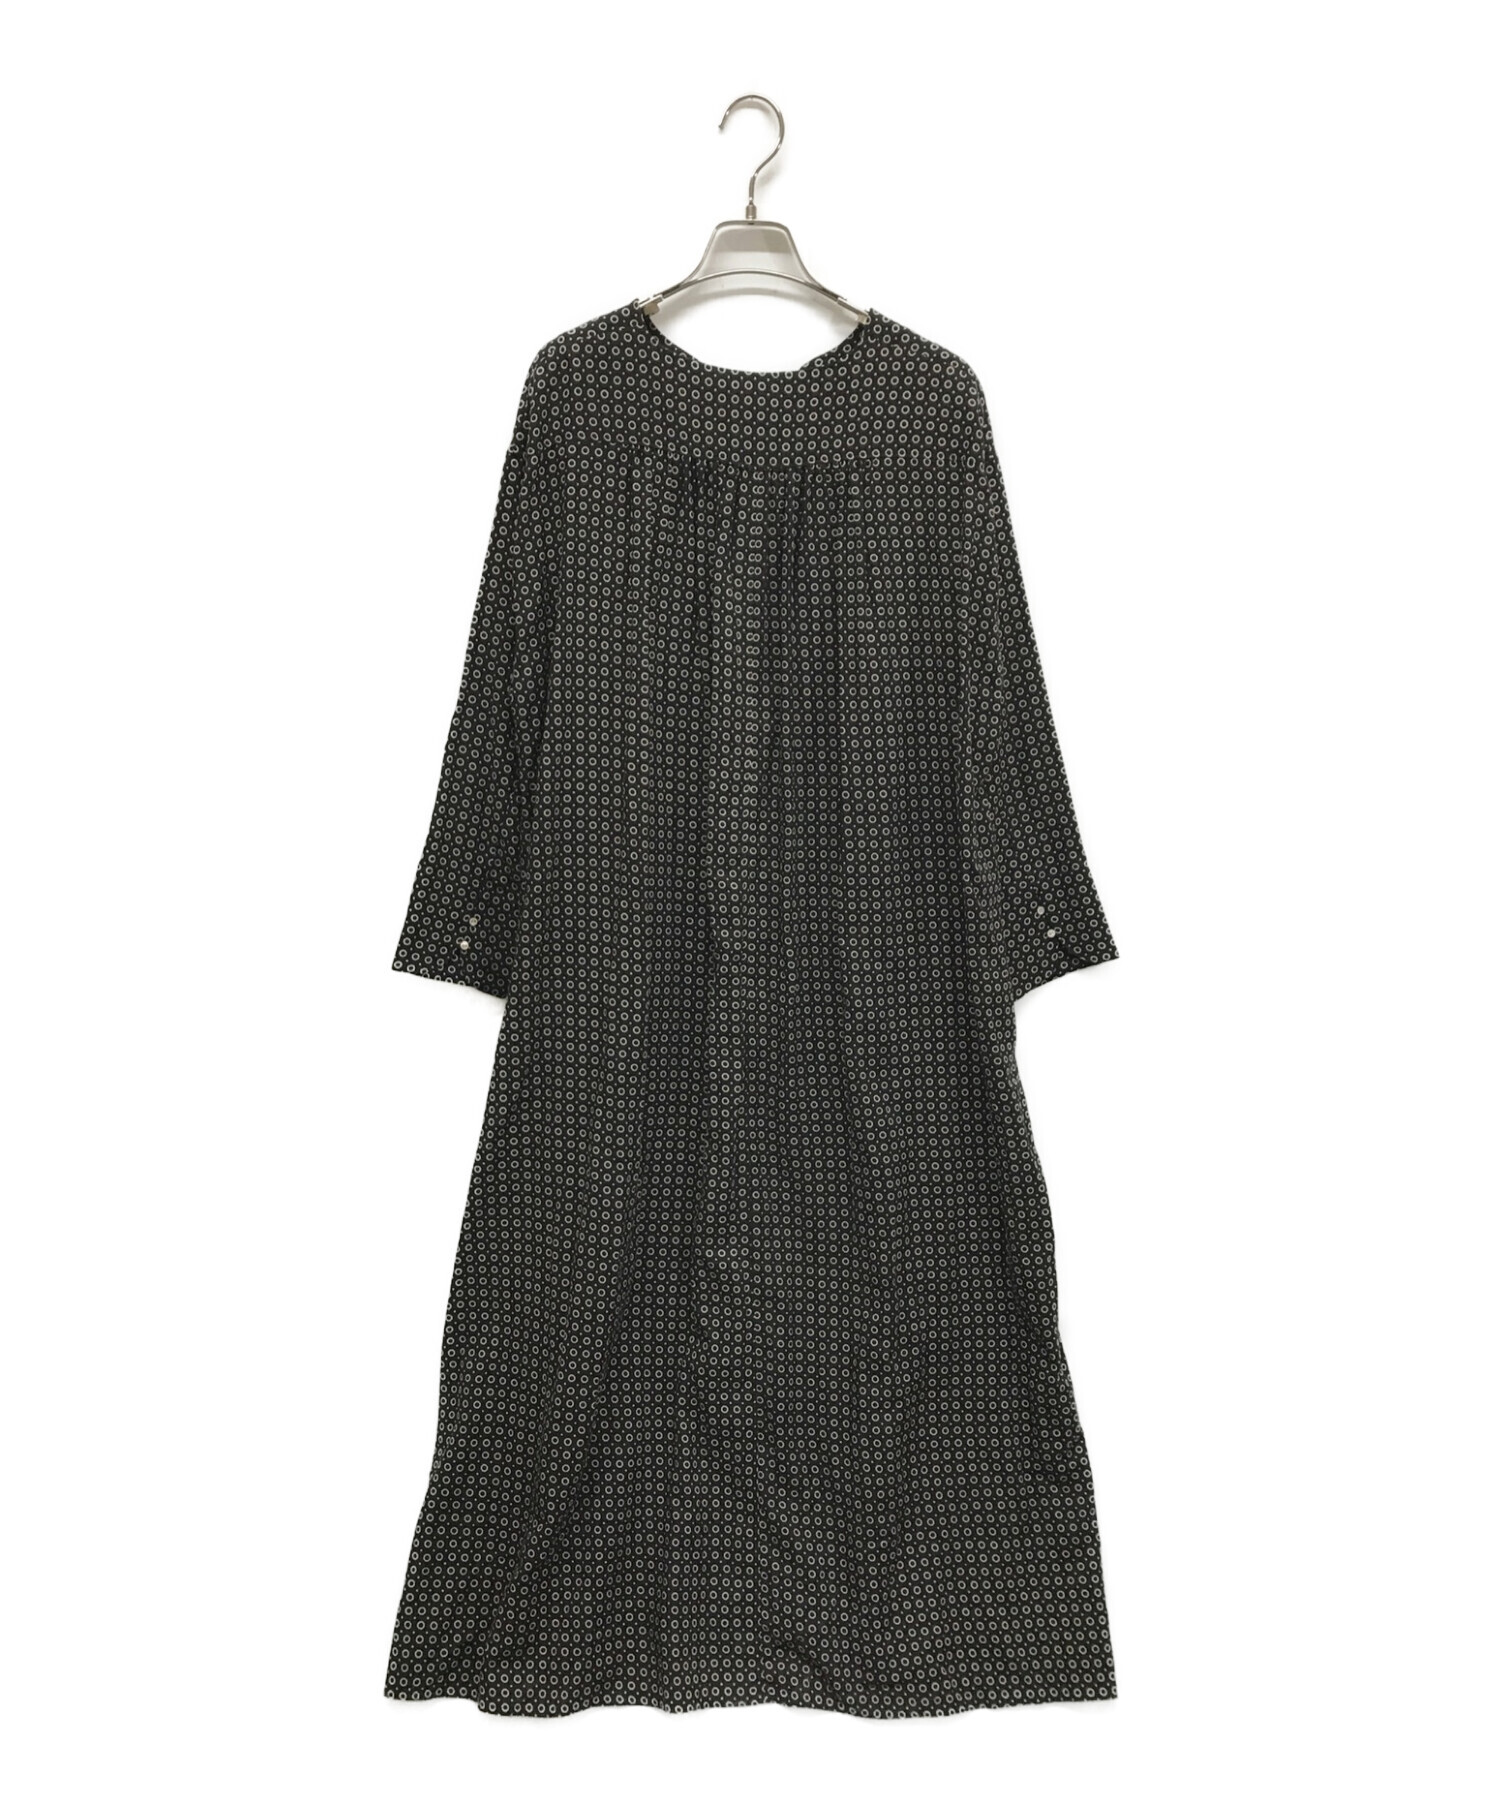 Phlannel (フランネル) Cotton Silk Komon Kaftan Dress カフタンドレス 総柄ワンピース  コットンシルクワンピース BBZ1012309A0002 ブラウン サイズ:SS